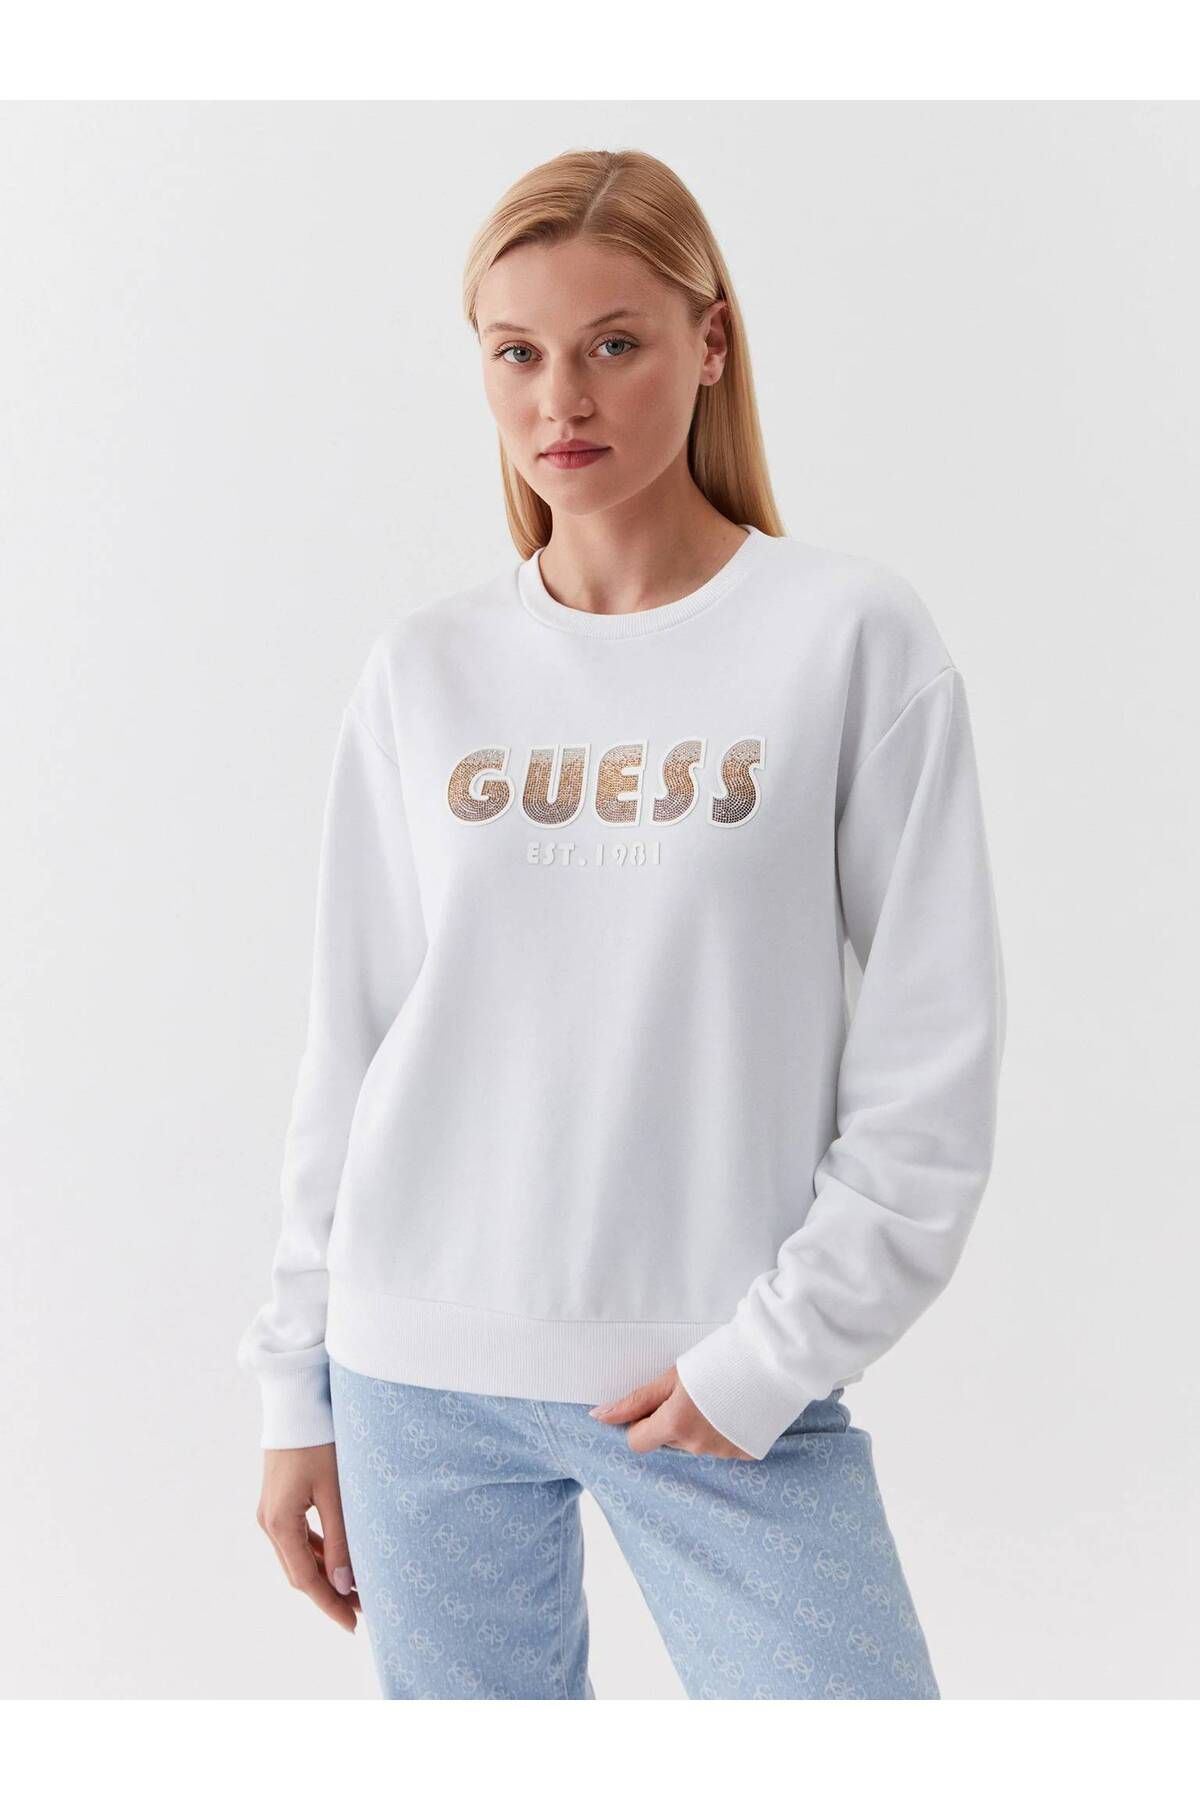 Guess - Sweatshirt